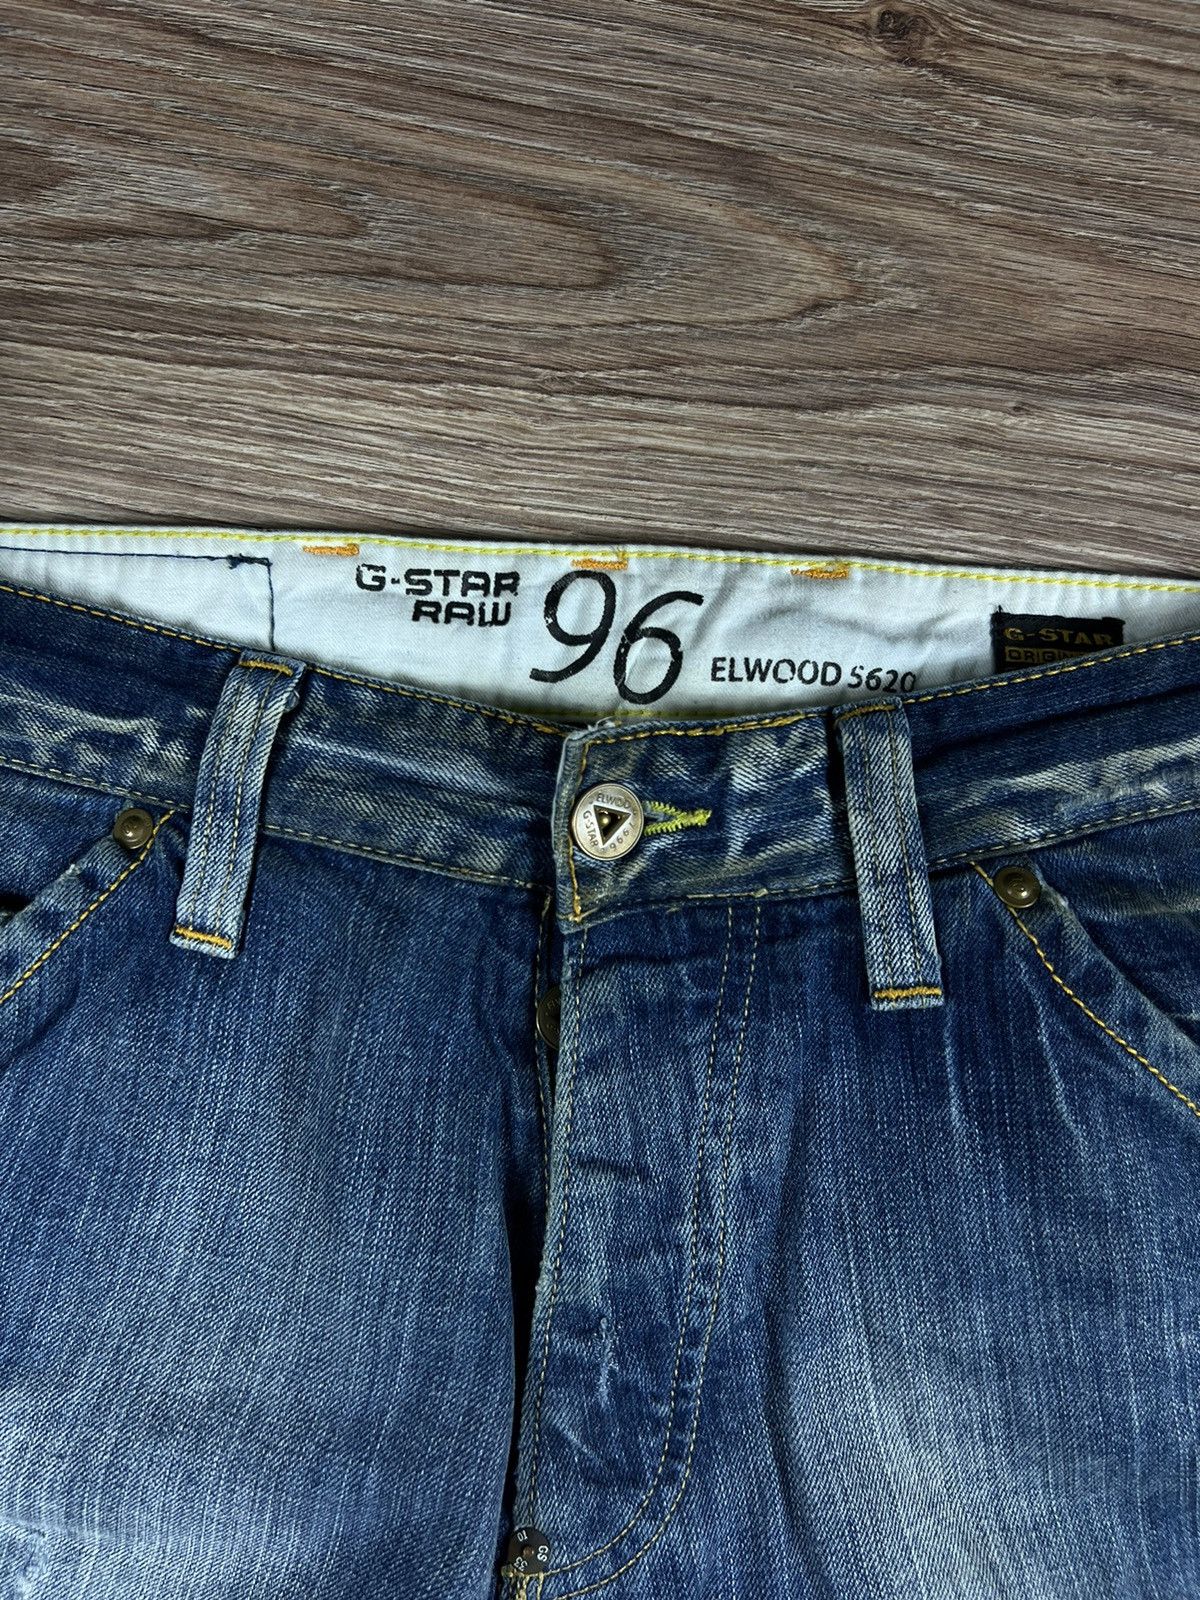 Vintage 💫 VINTAGE 90’S G-STAR RAW DISTRESSED WASHED DENIM PANTS Size US 30 / EU 46 - 9 Thumbnail